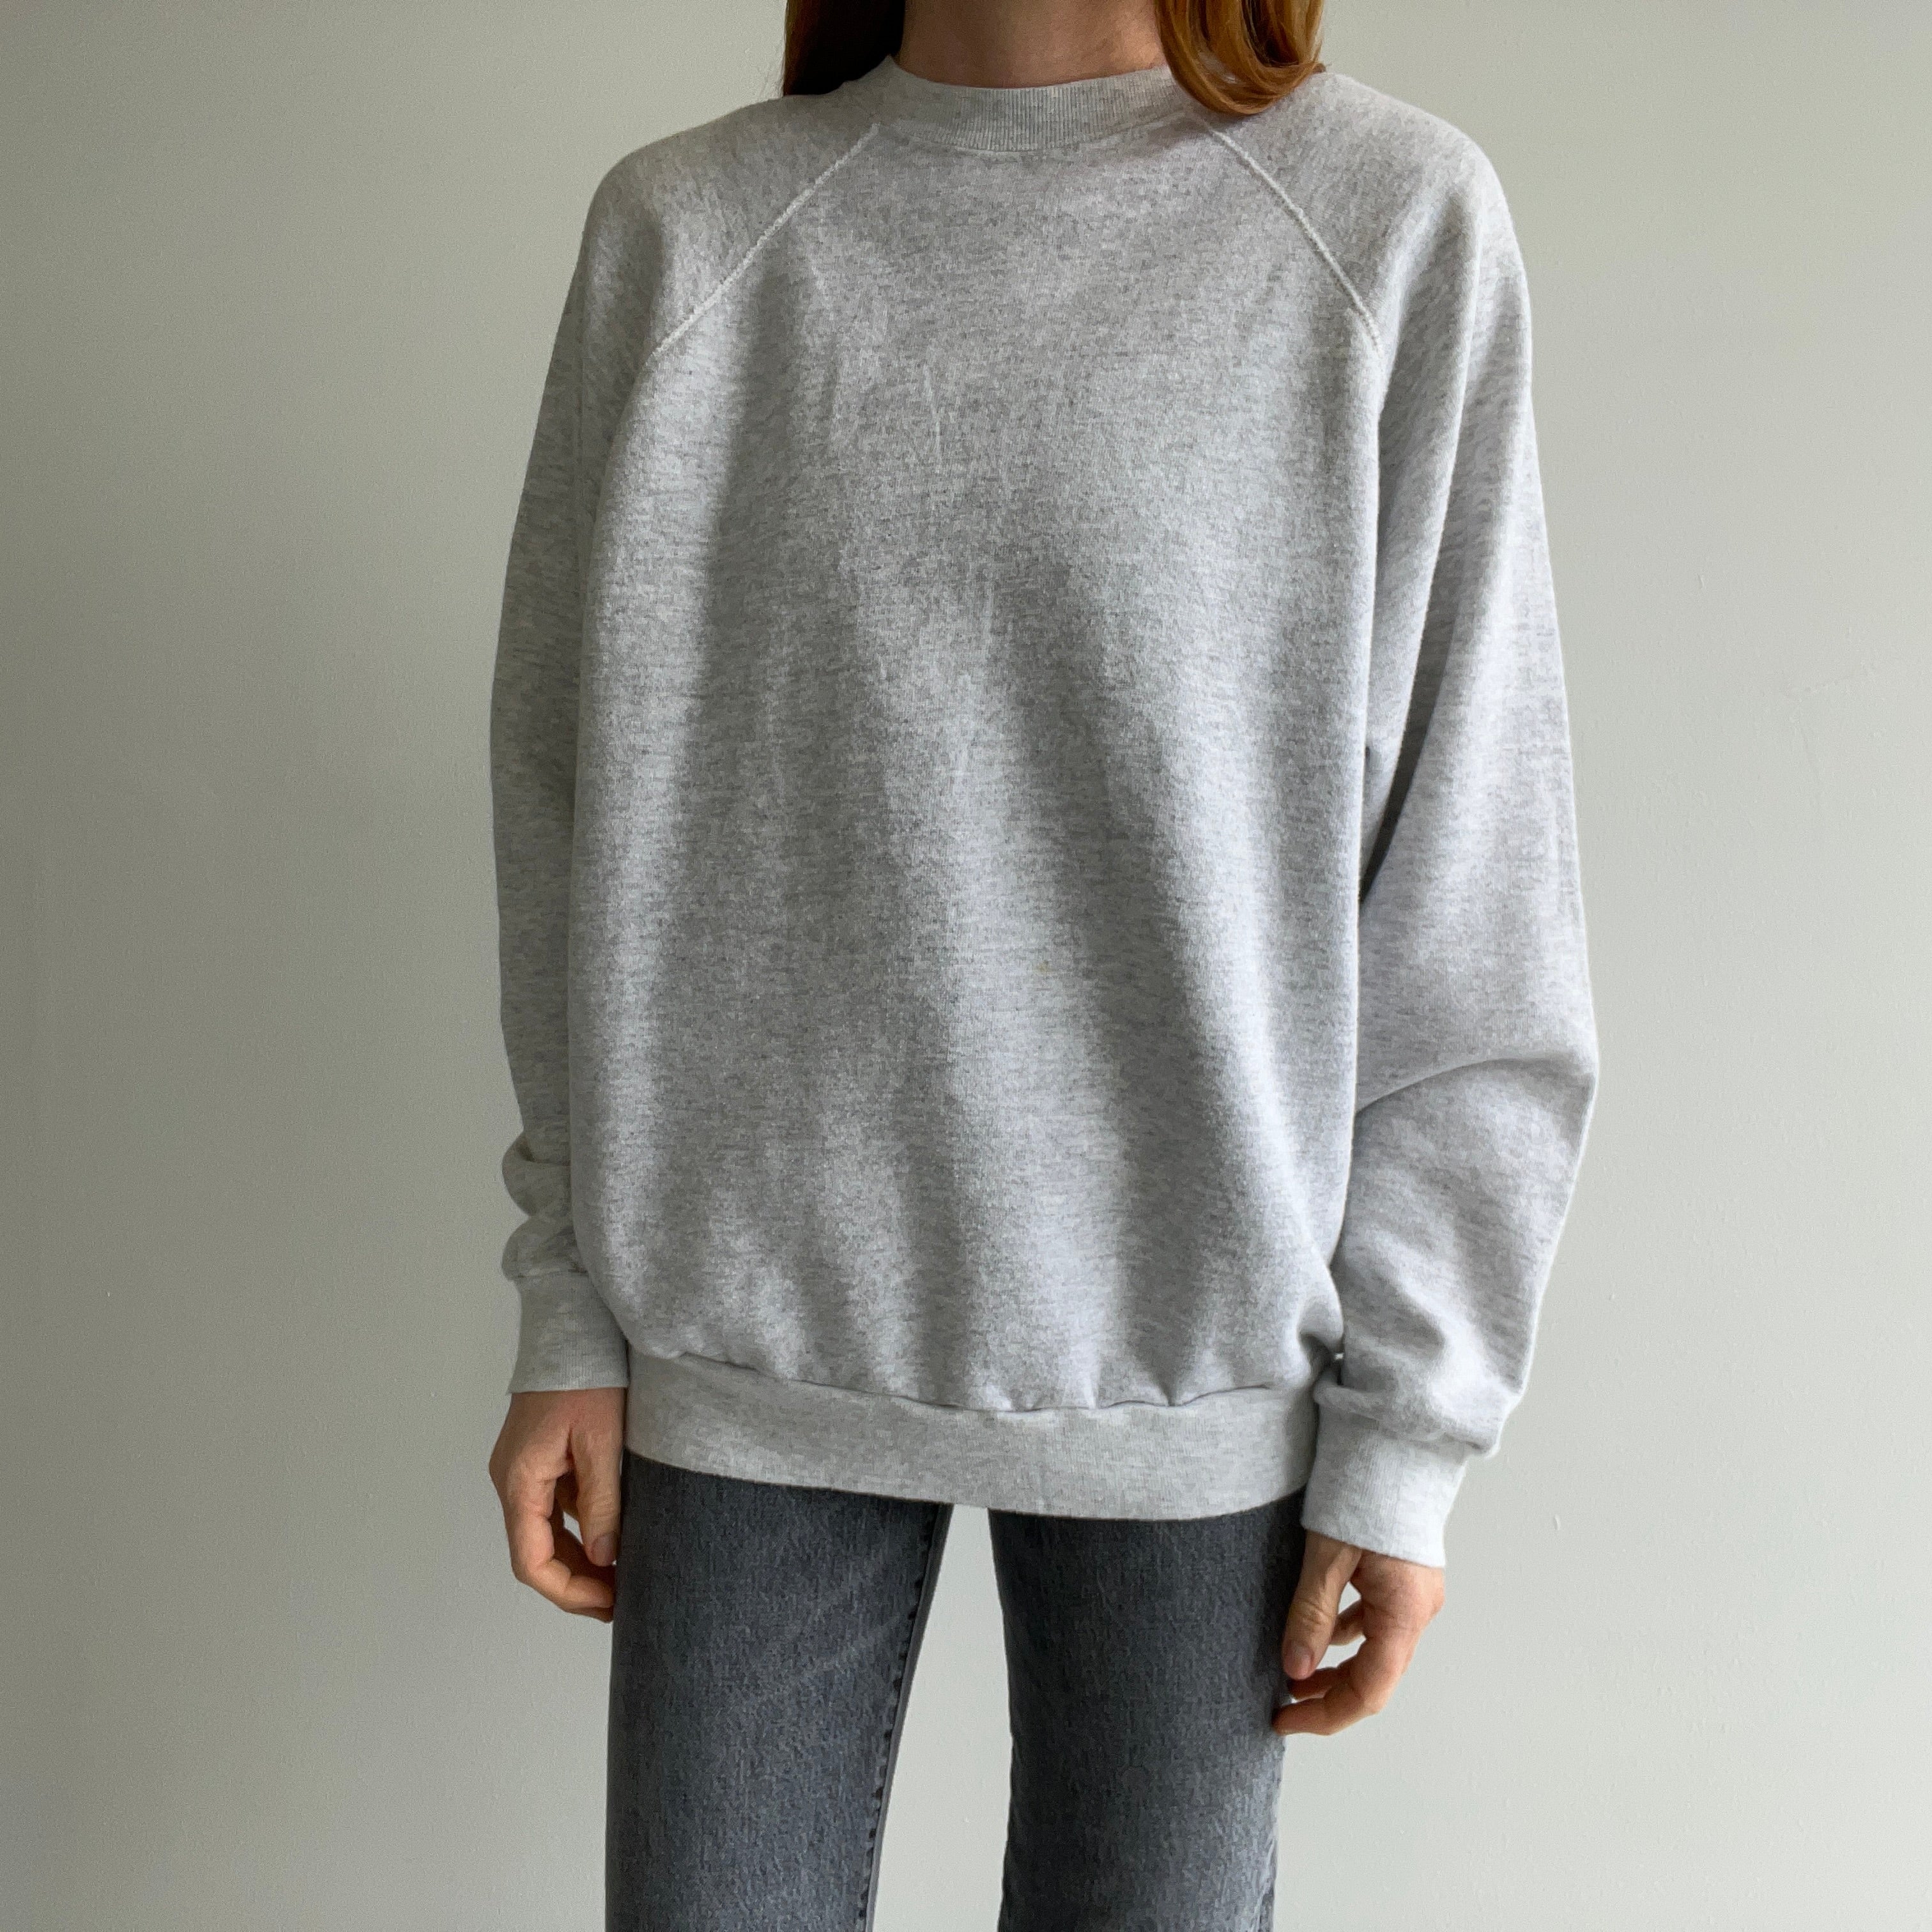 1990s Light Gray Tultex Sweatshirt